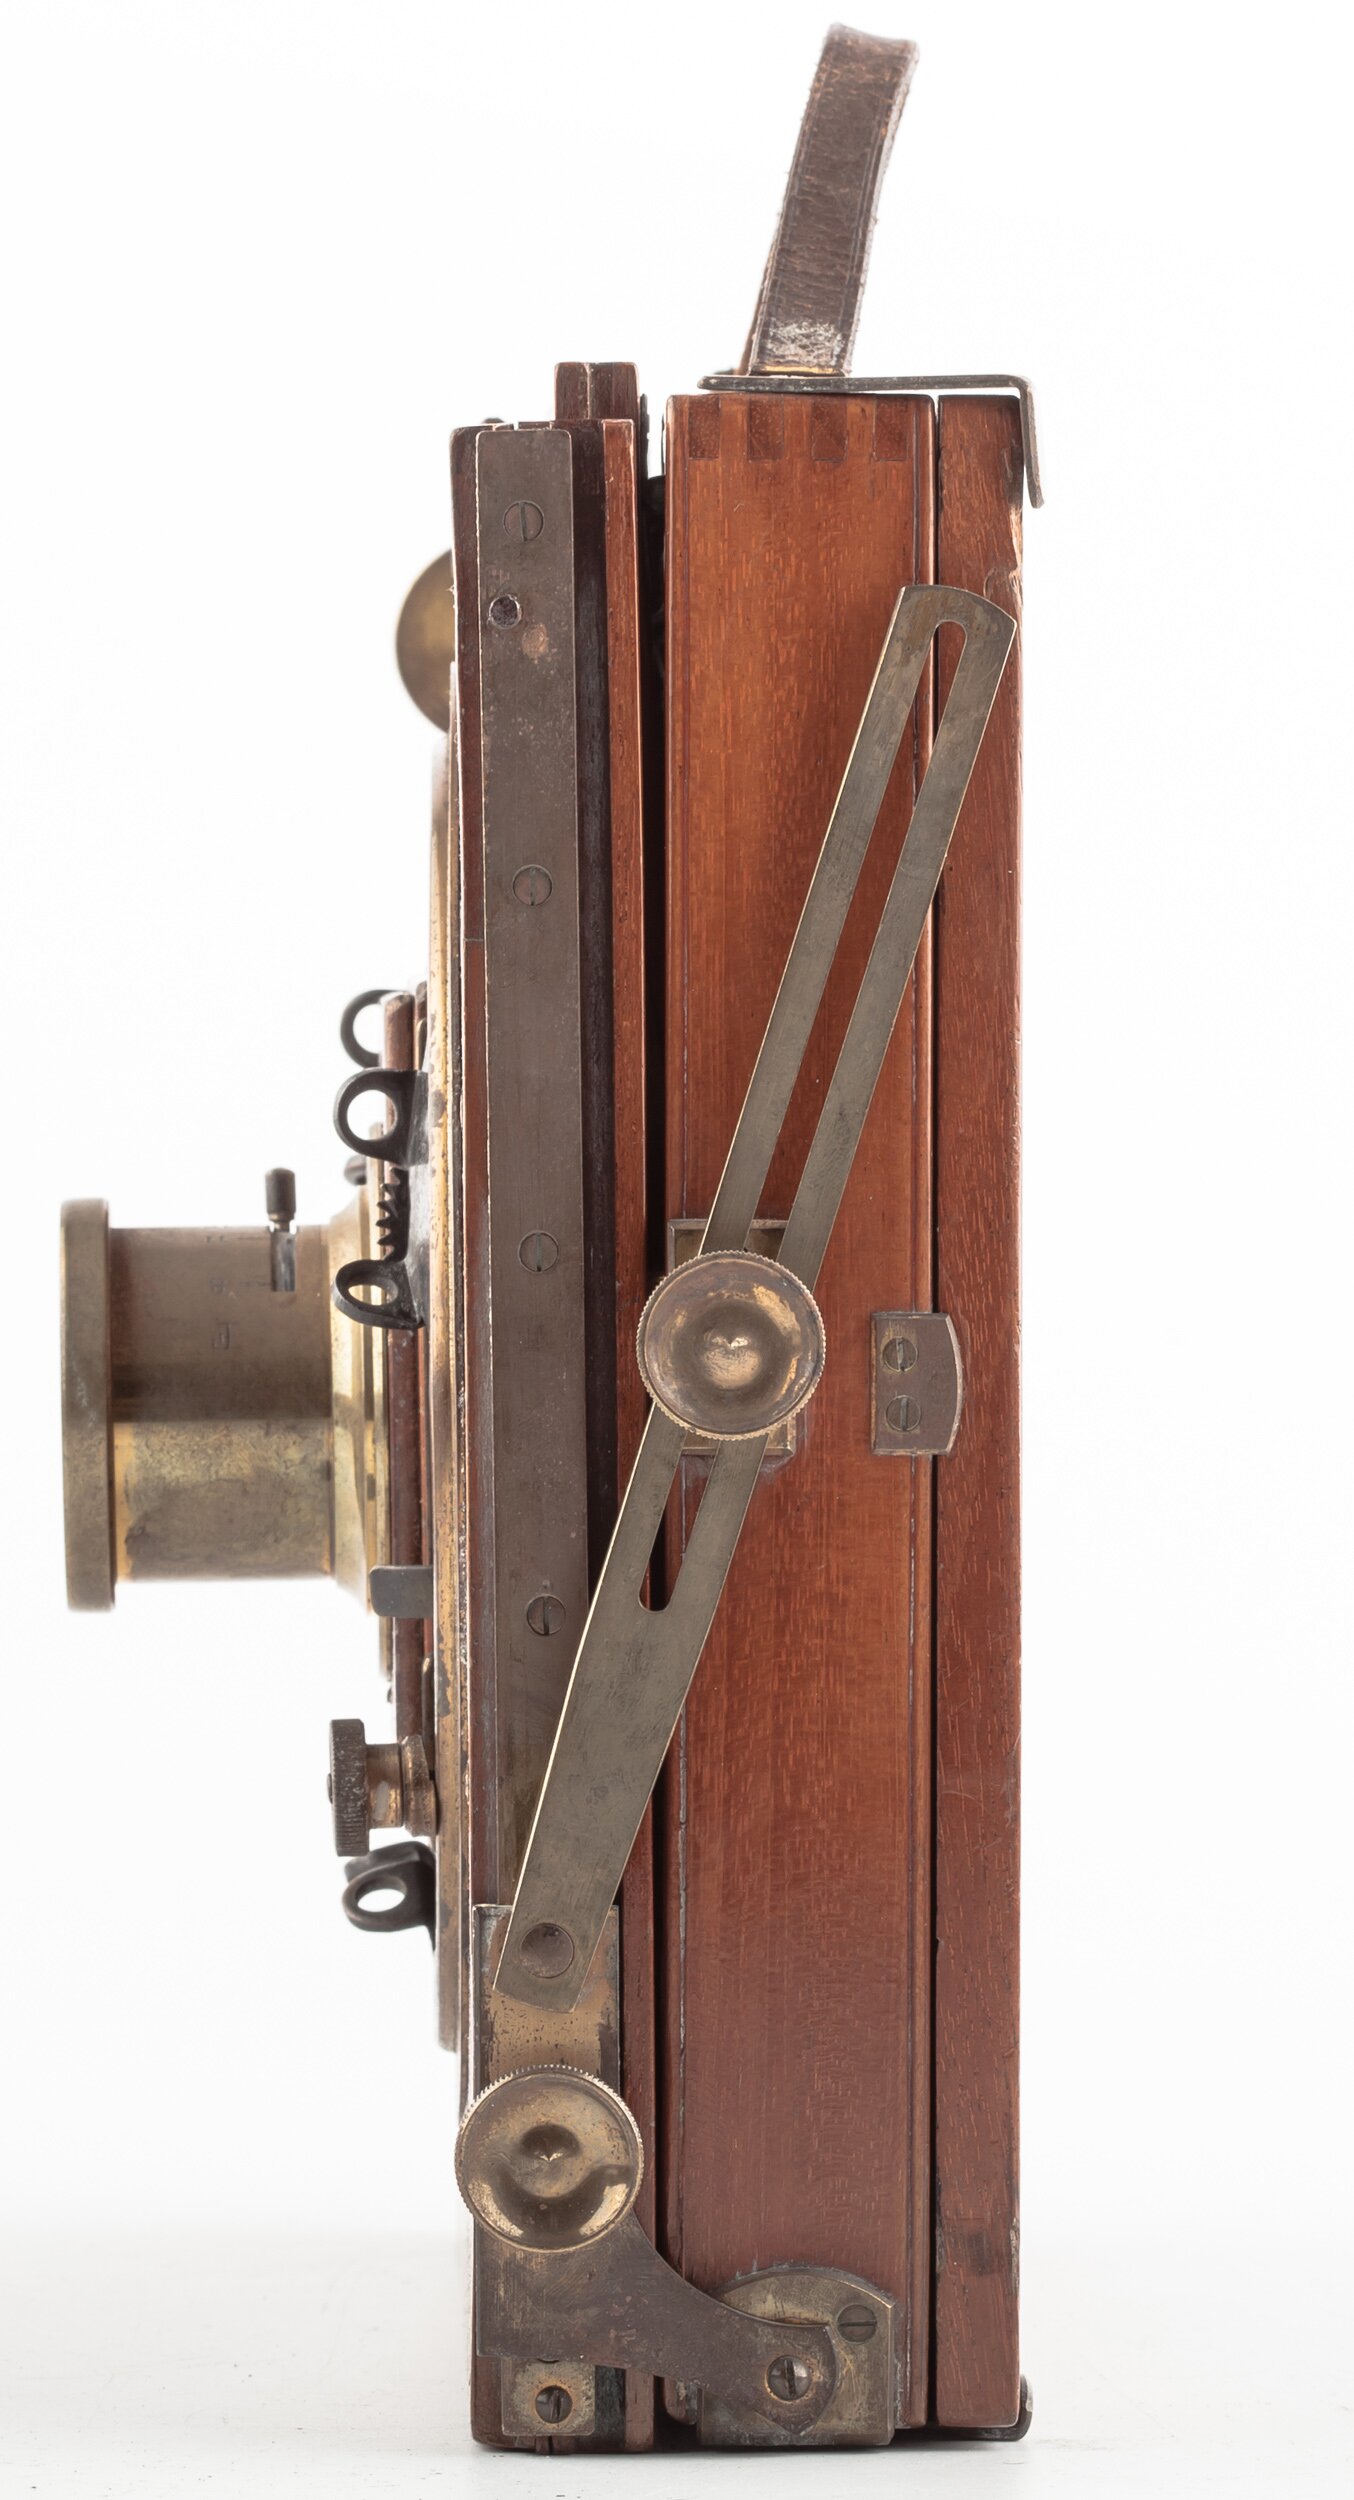 Englische Reisekamera Format 11,5x16cm Thomas Baird Glasgow 1905